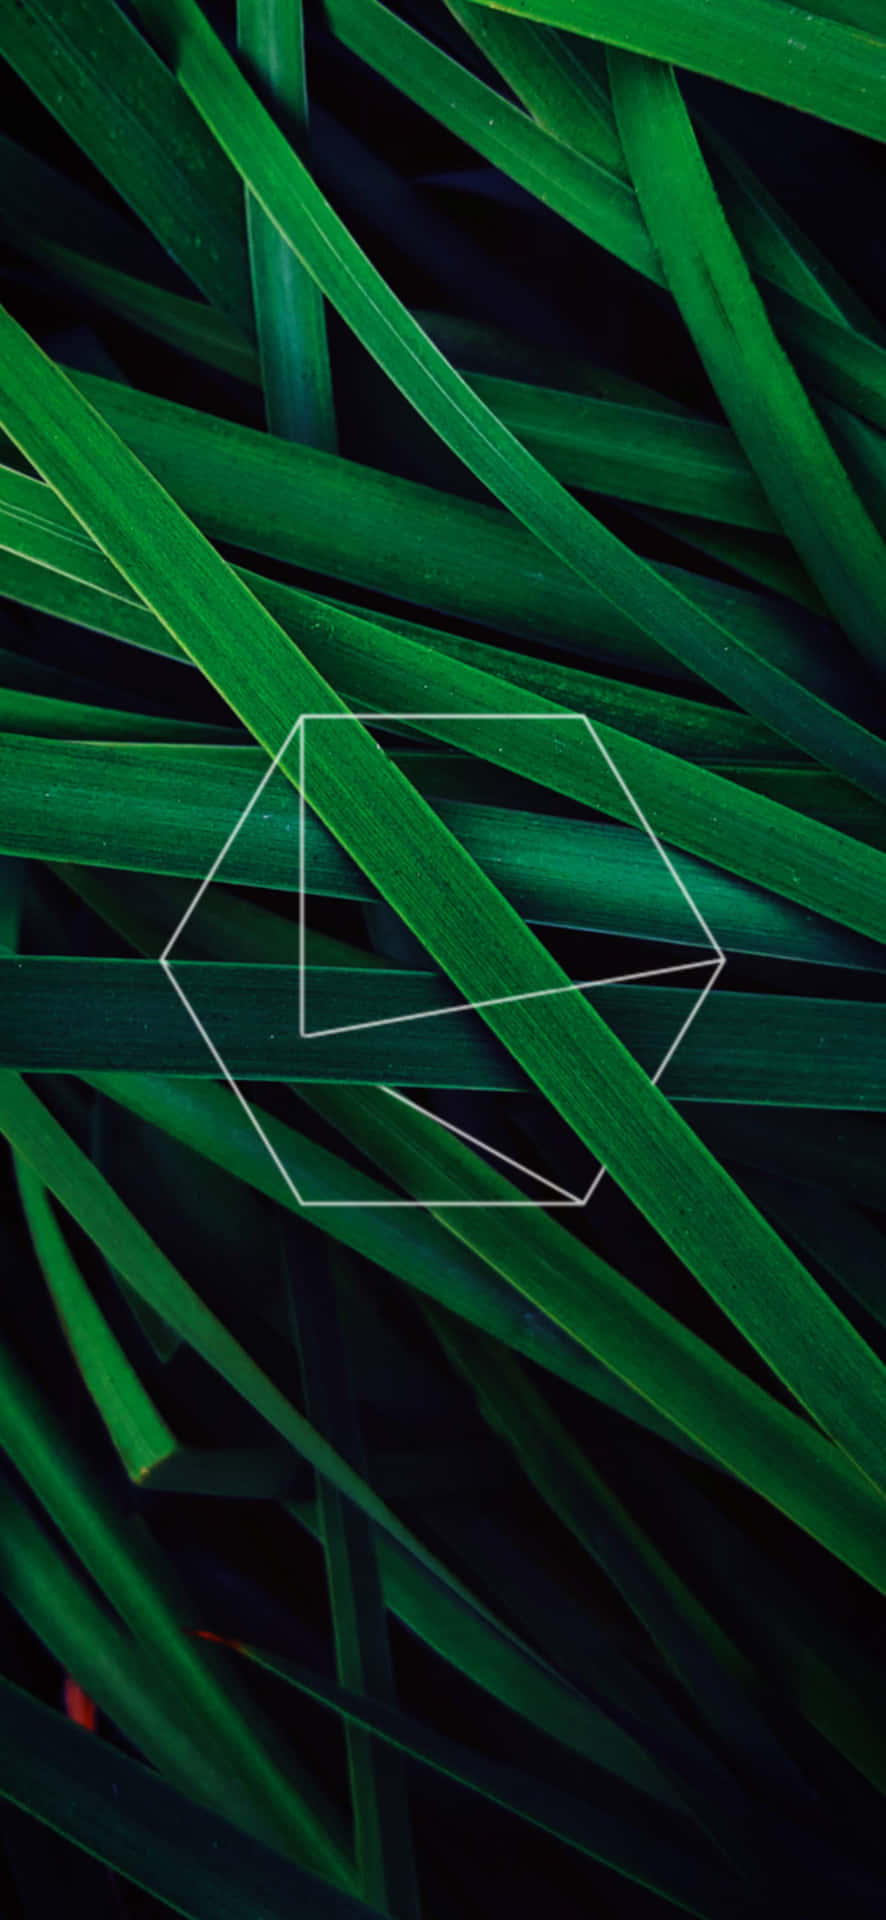 Green Leaves Geometric Overlay Wallpaper